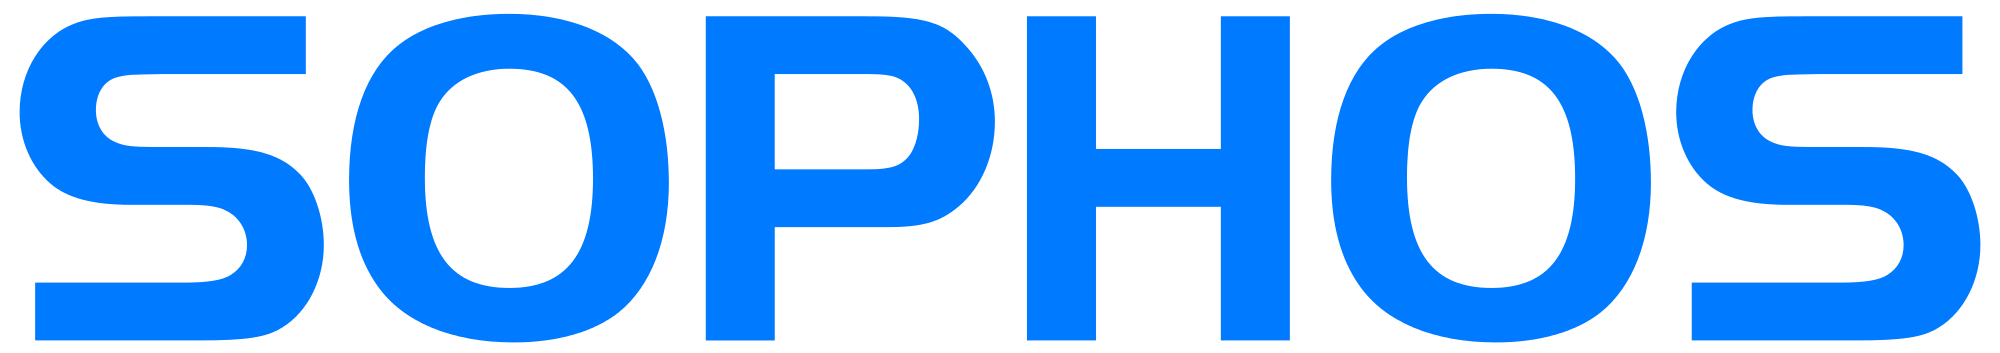 david®-Logo